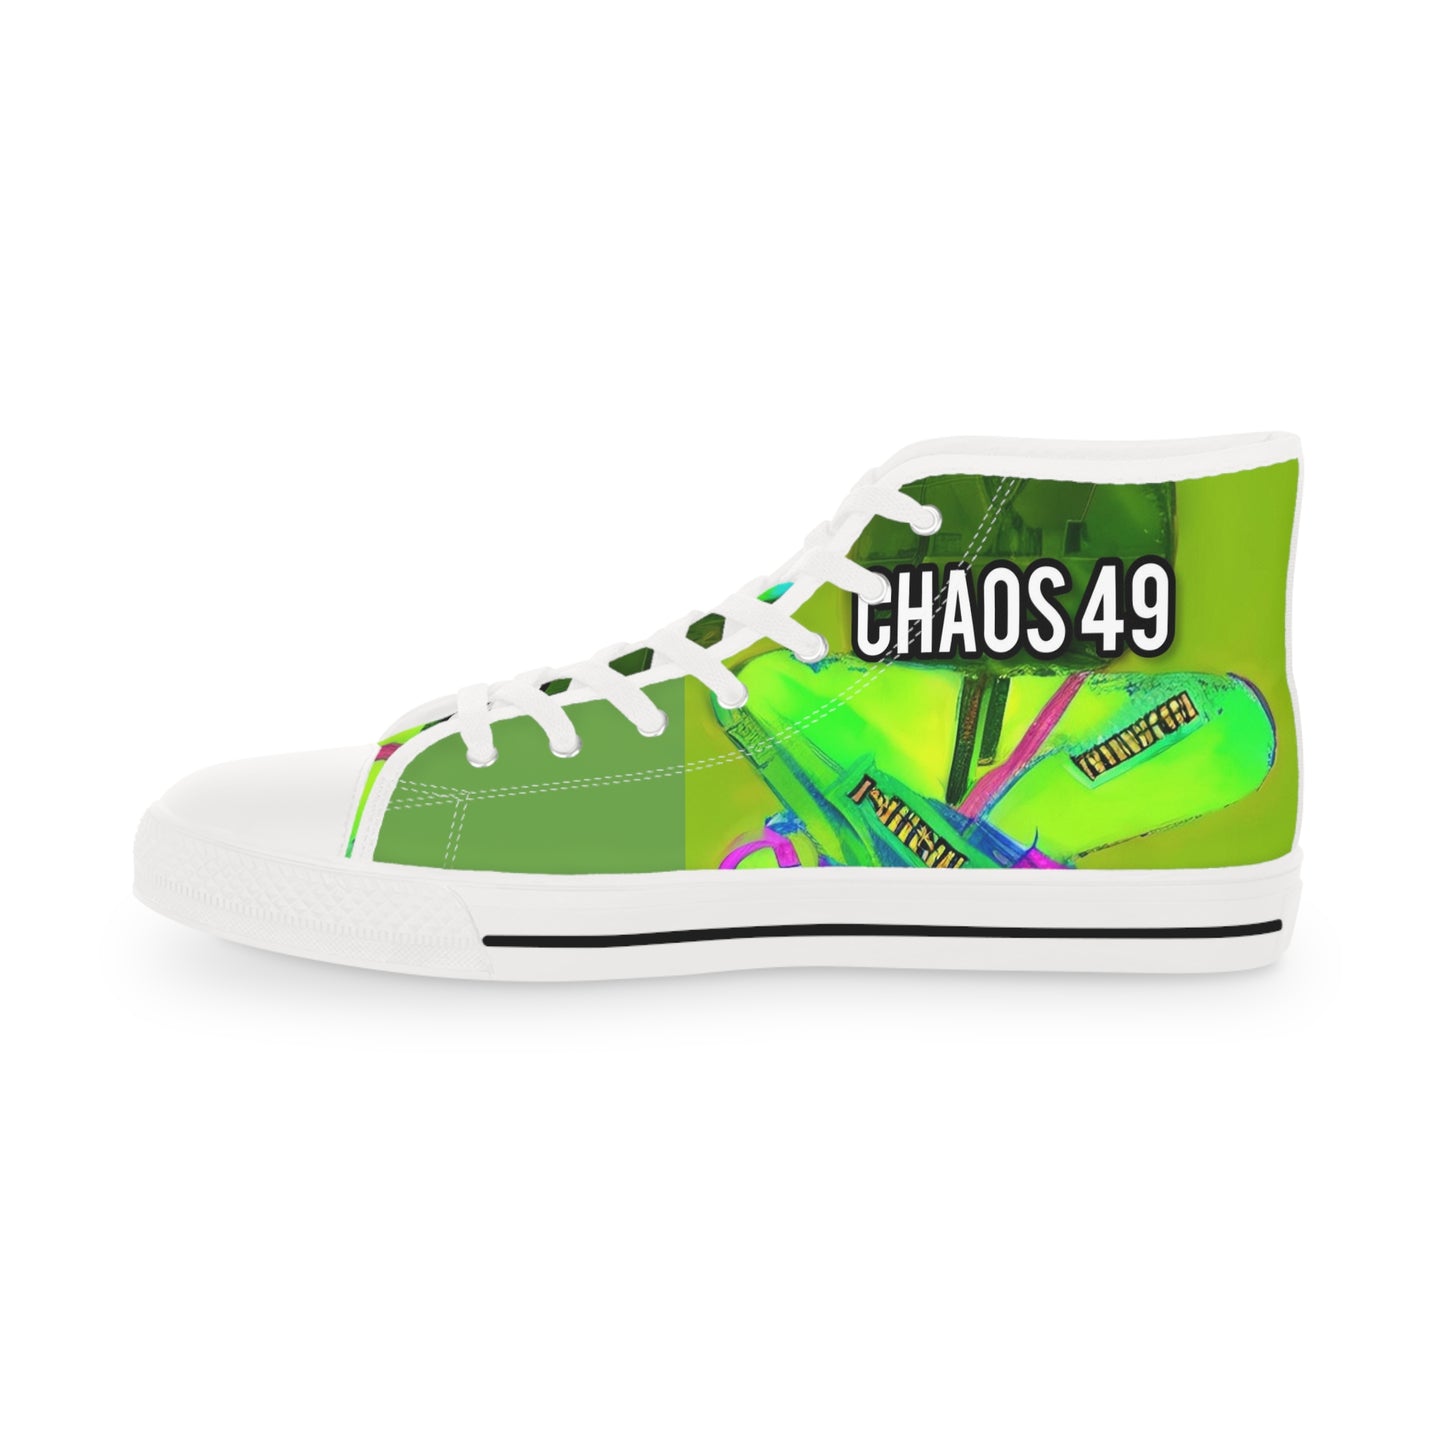 Chaos 45 Men's High Top Sneakers